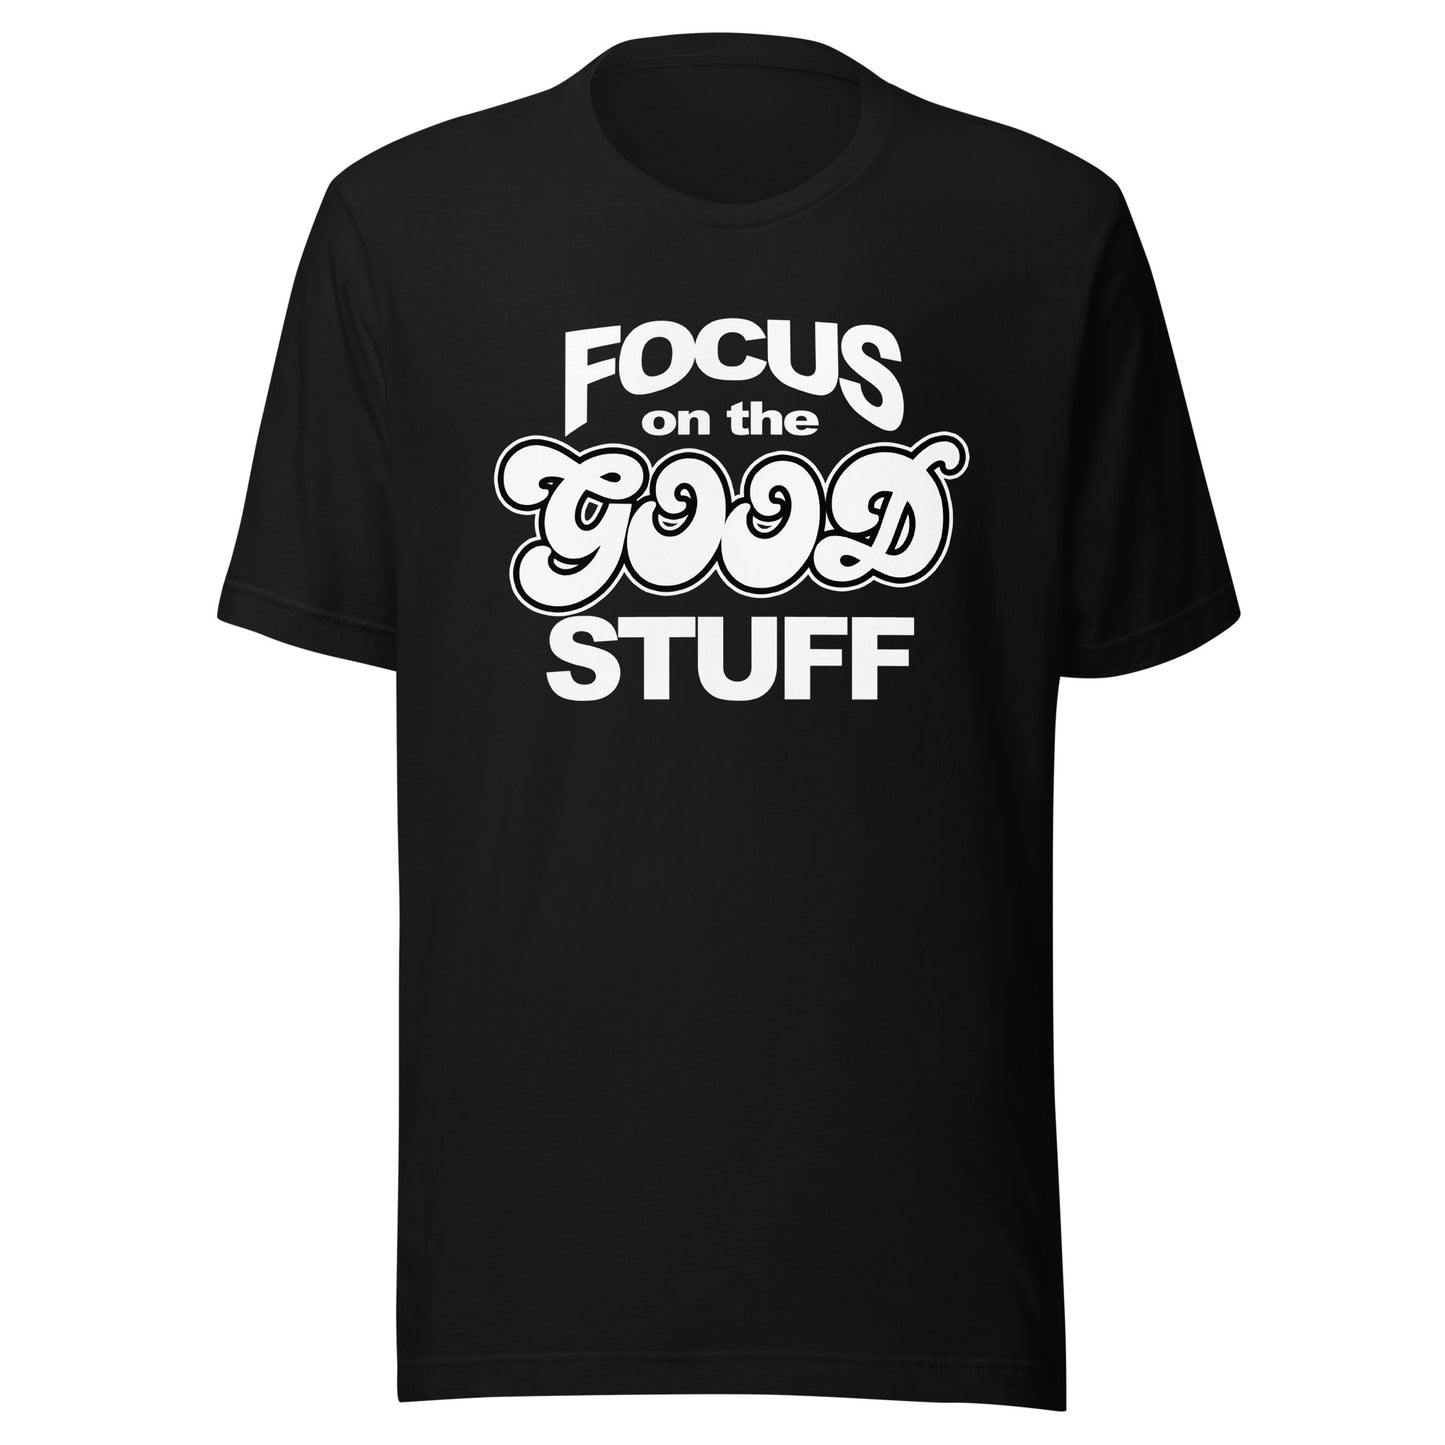 Focus on the Good Stuff - Unisex t-shirt - Black